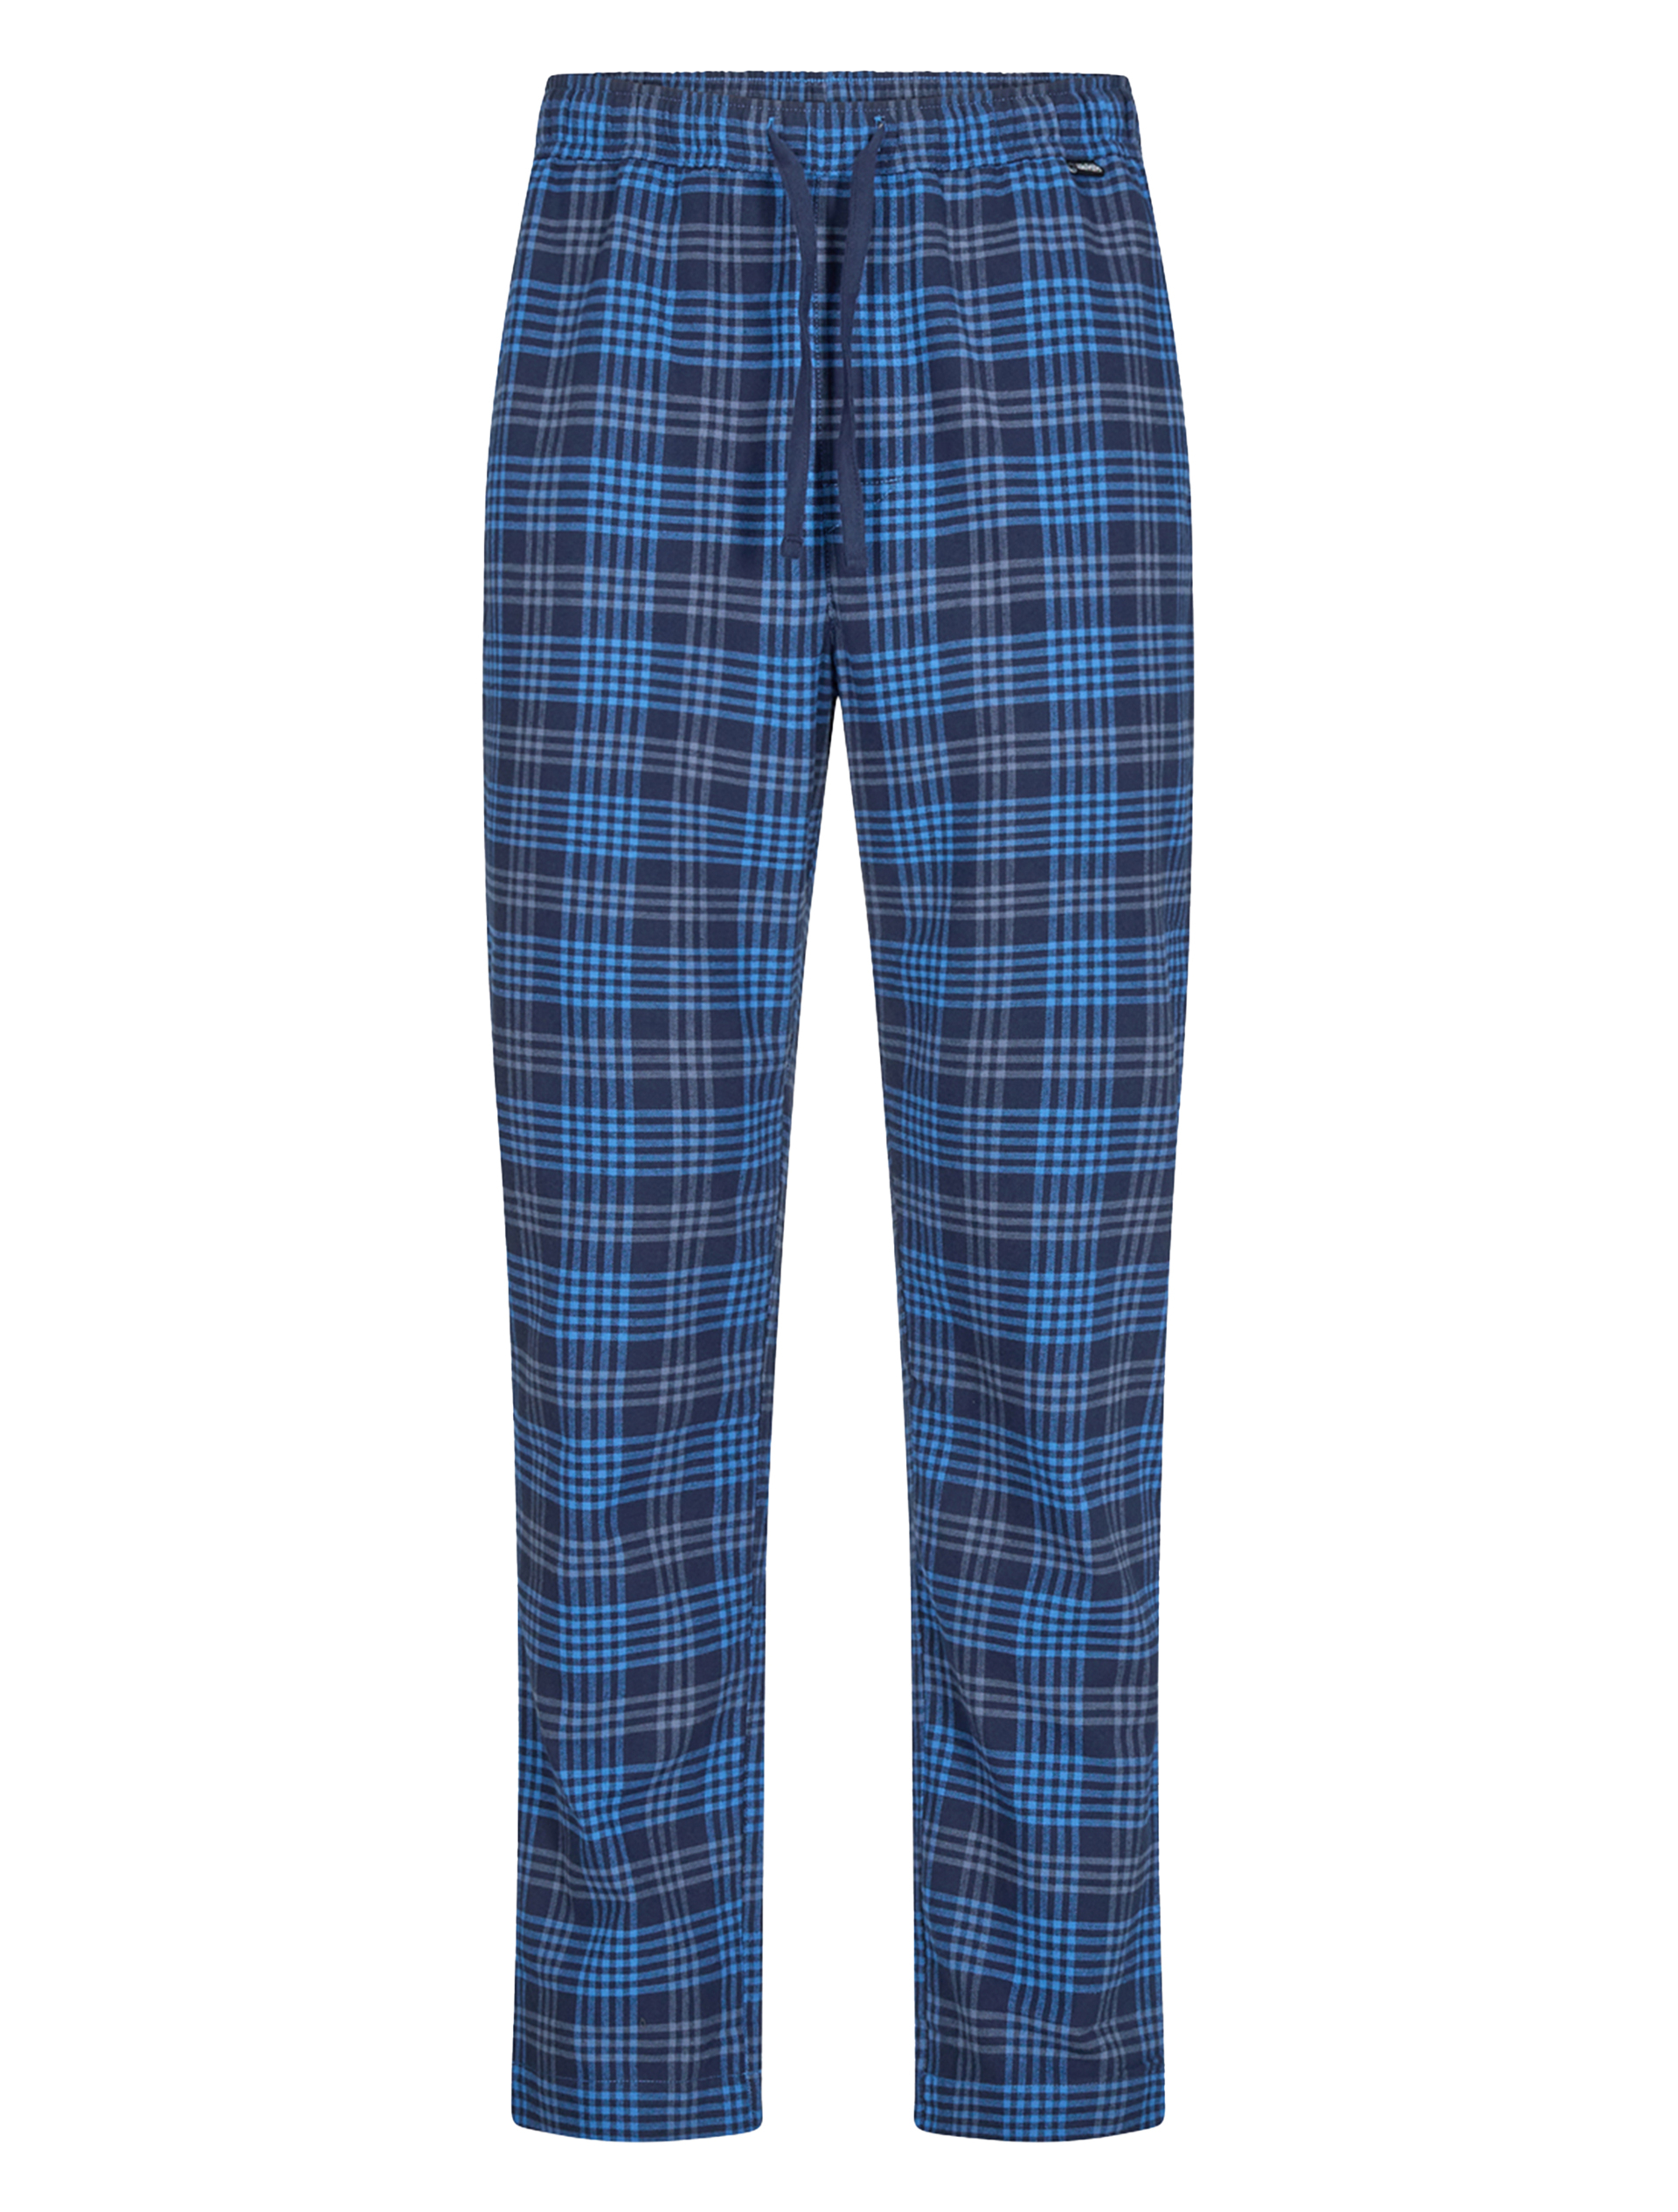 JBS Pyjamas blå / 1299 navy blue